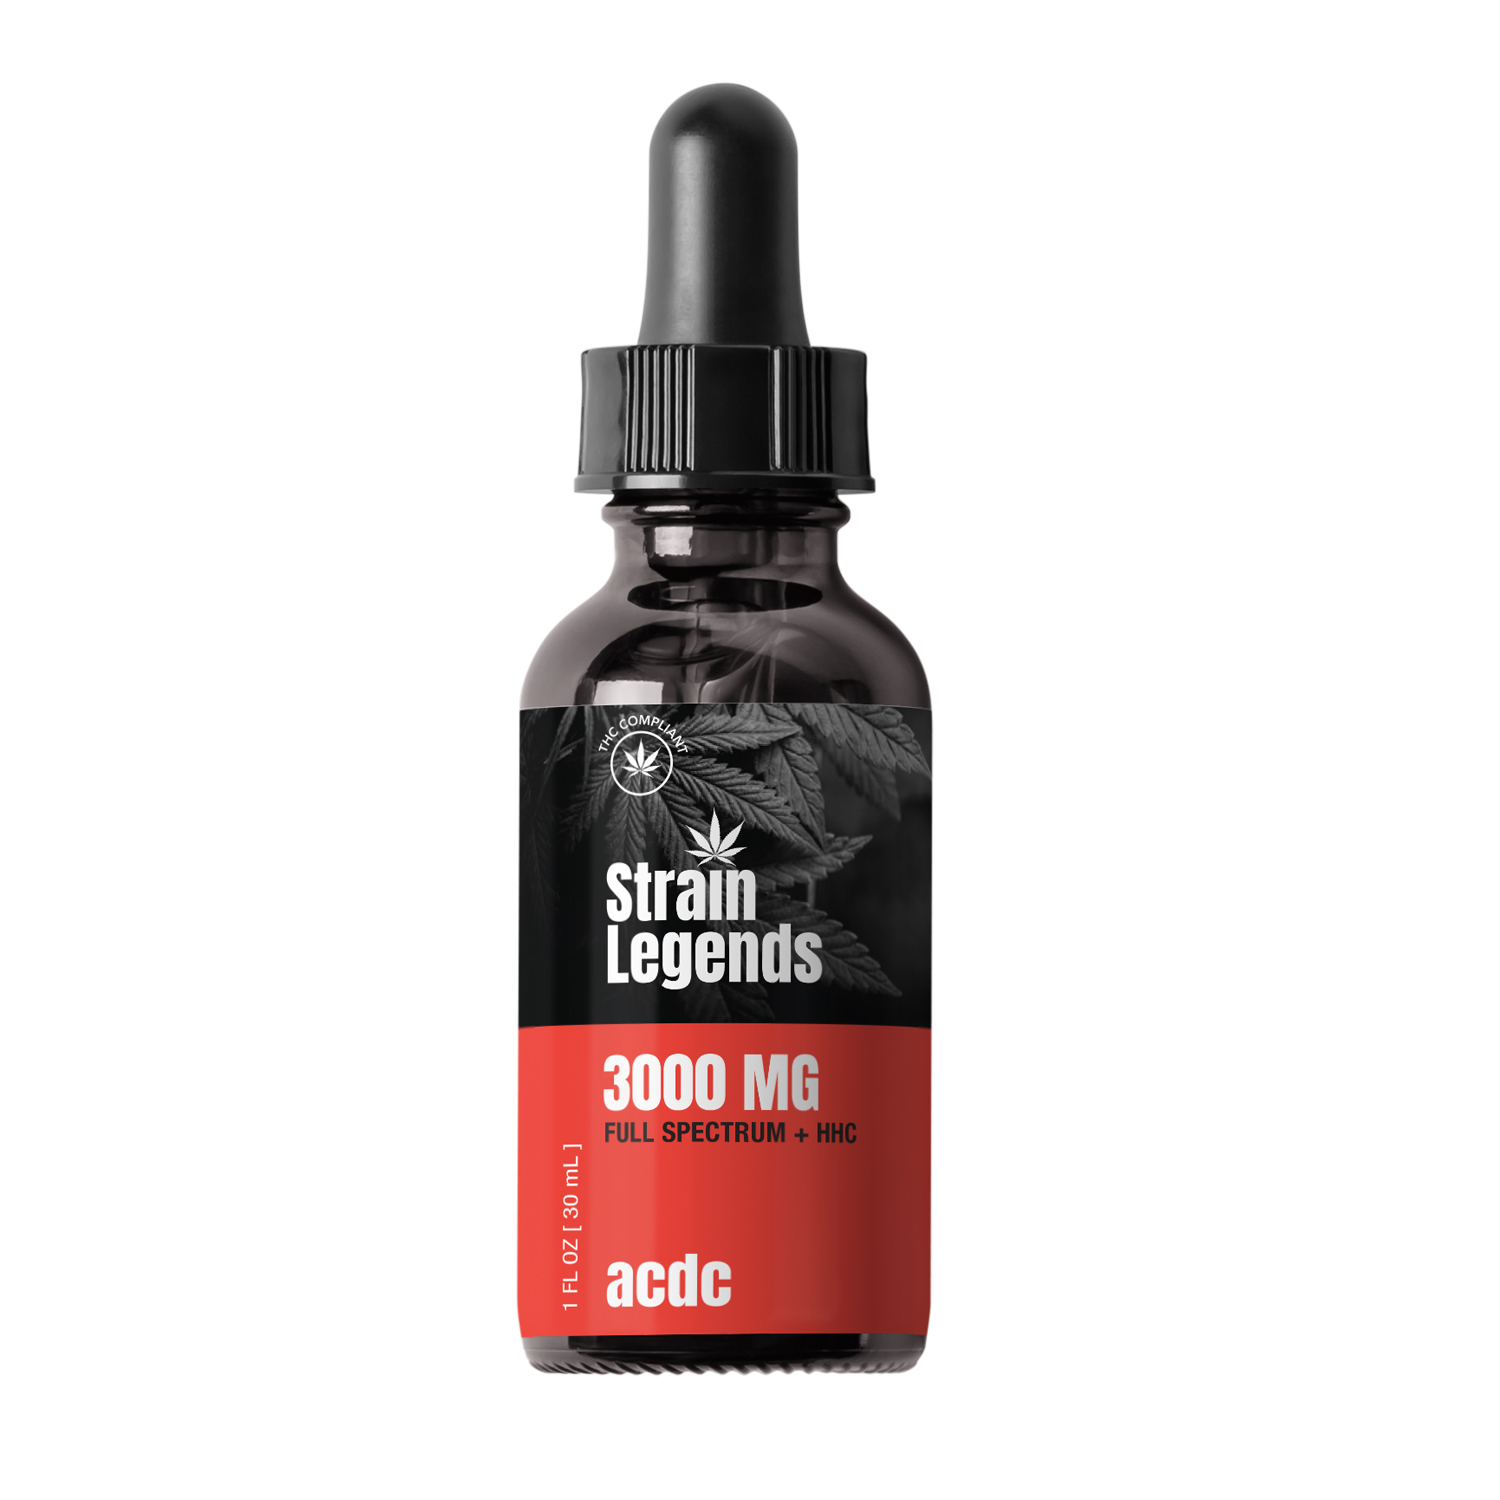 Strain Legends 3000 mg Full Spectrum + HHC Tincture, ACDC